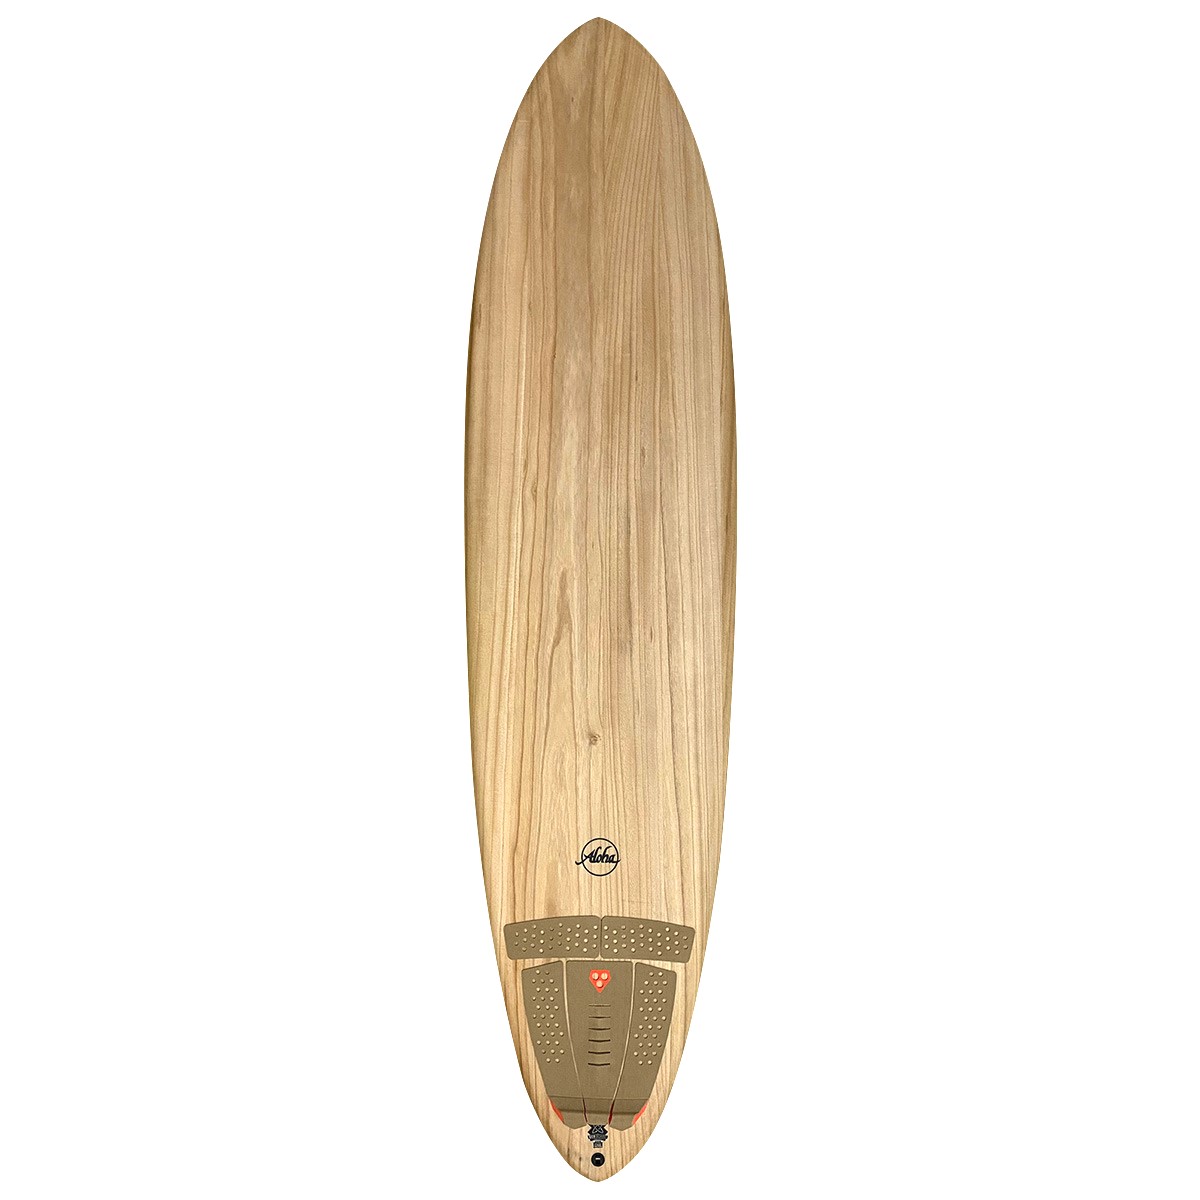 ALOHA SURFBOARDS / ALOHA Surfboards / FUN DIVISION MID 7'6 ECO SKIN